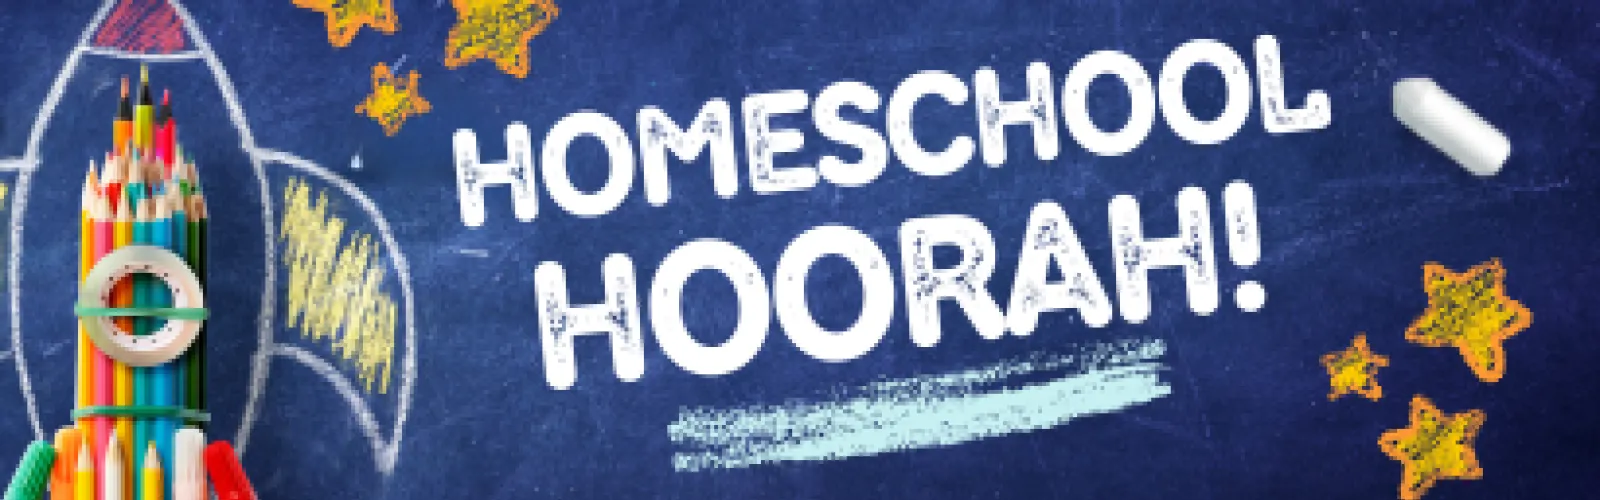 Homeschool Hoorah! program title over a dark blue chalkboard with chalk doodles all over it.